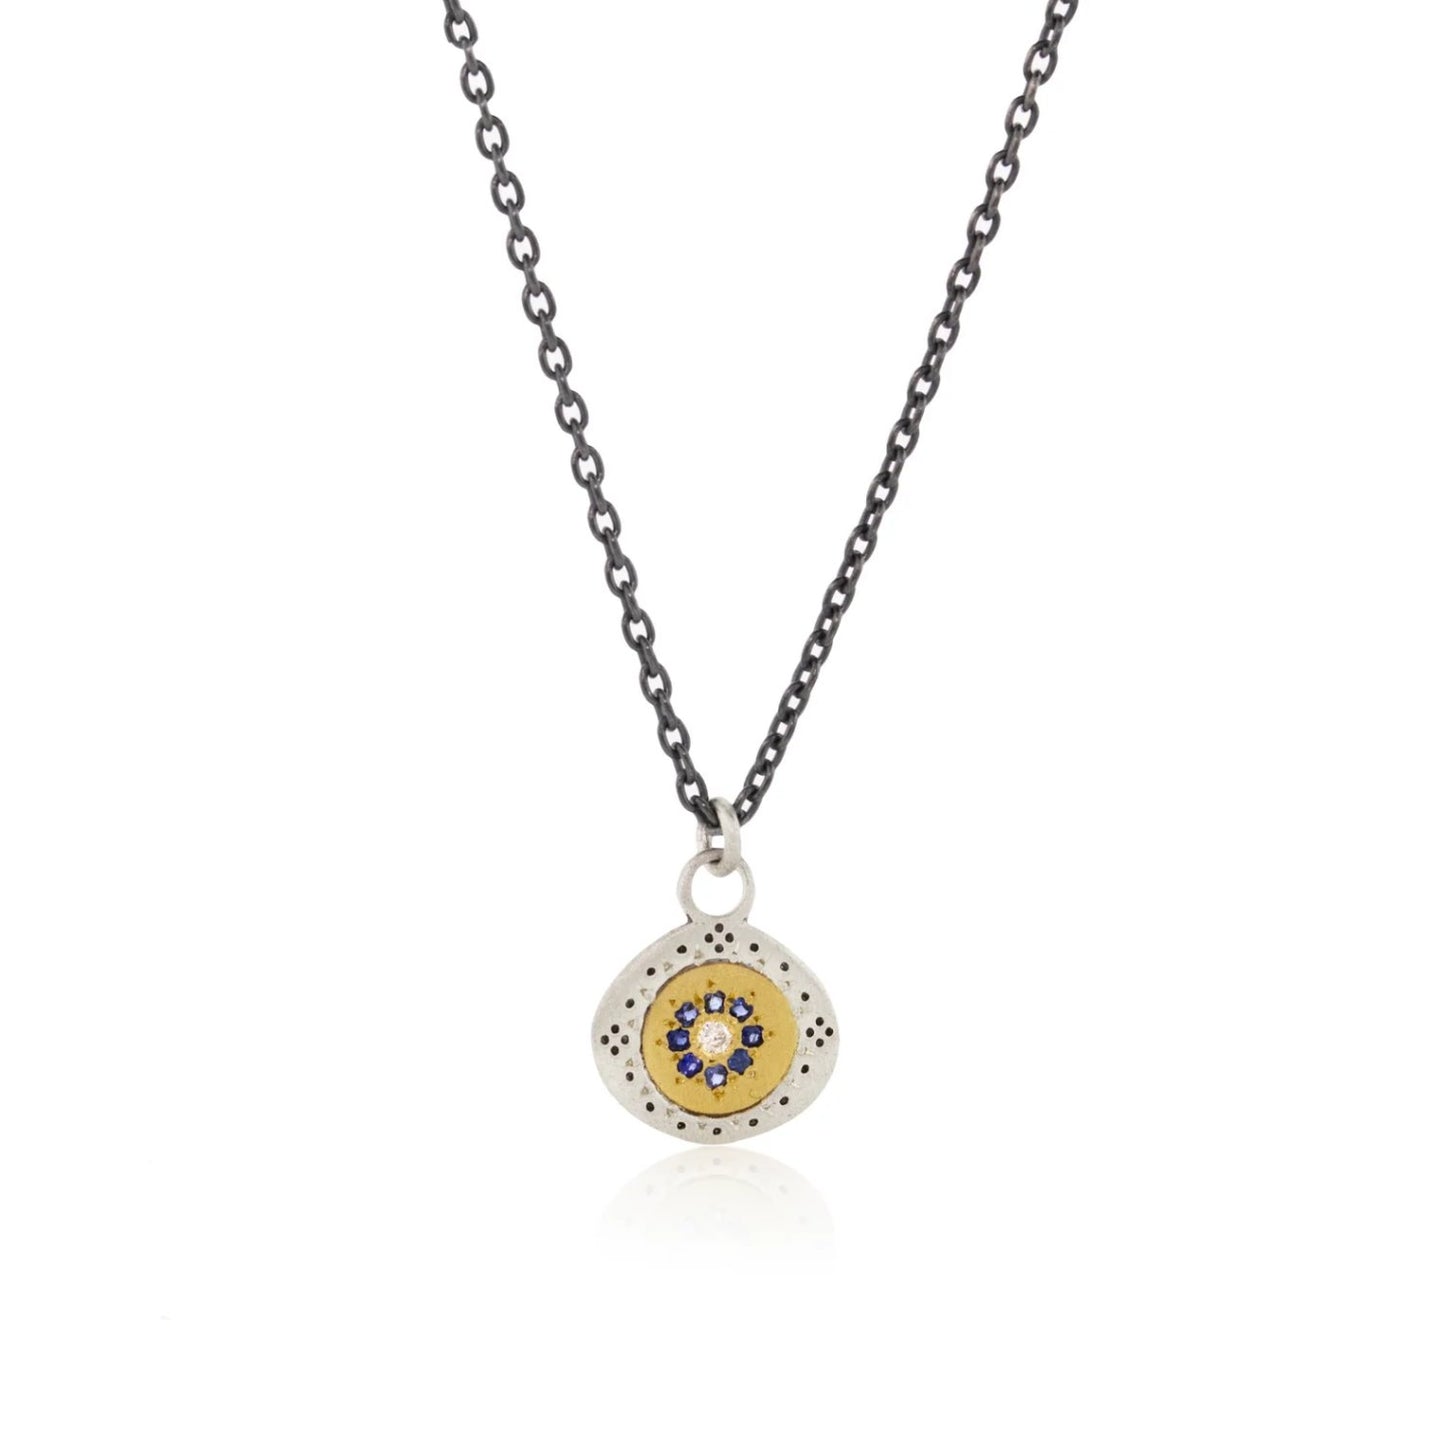 Adel Chefridi Studio | Diamond + Blue Sapphire 18k Gold "Seeds of Harmony" Charm Necklace | Firecracker